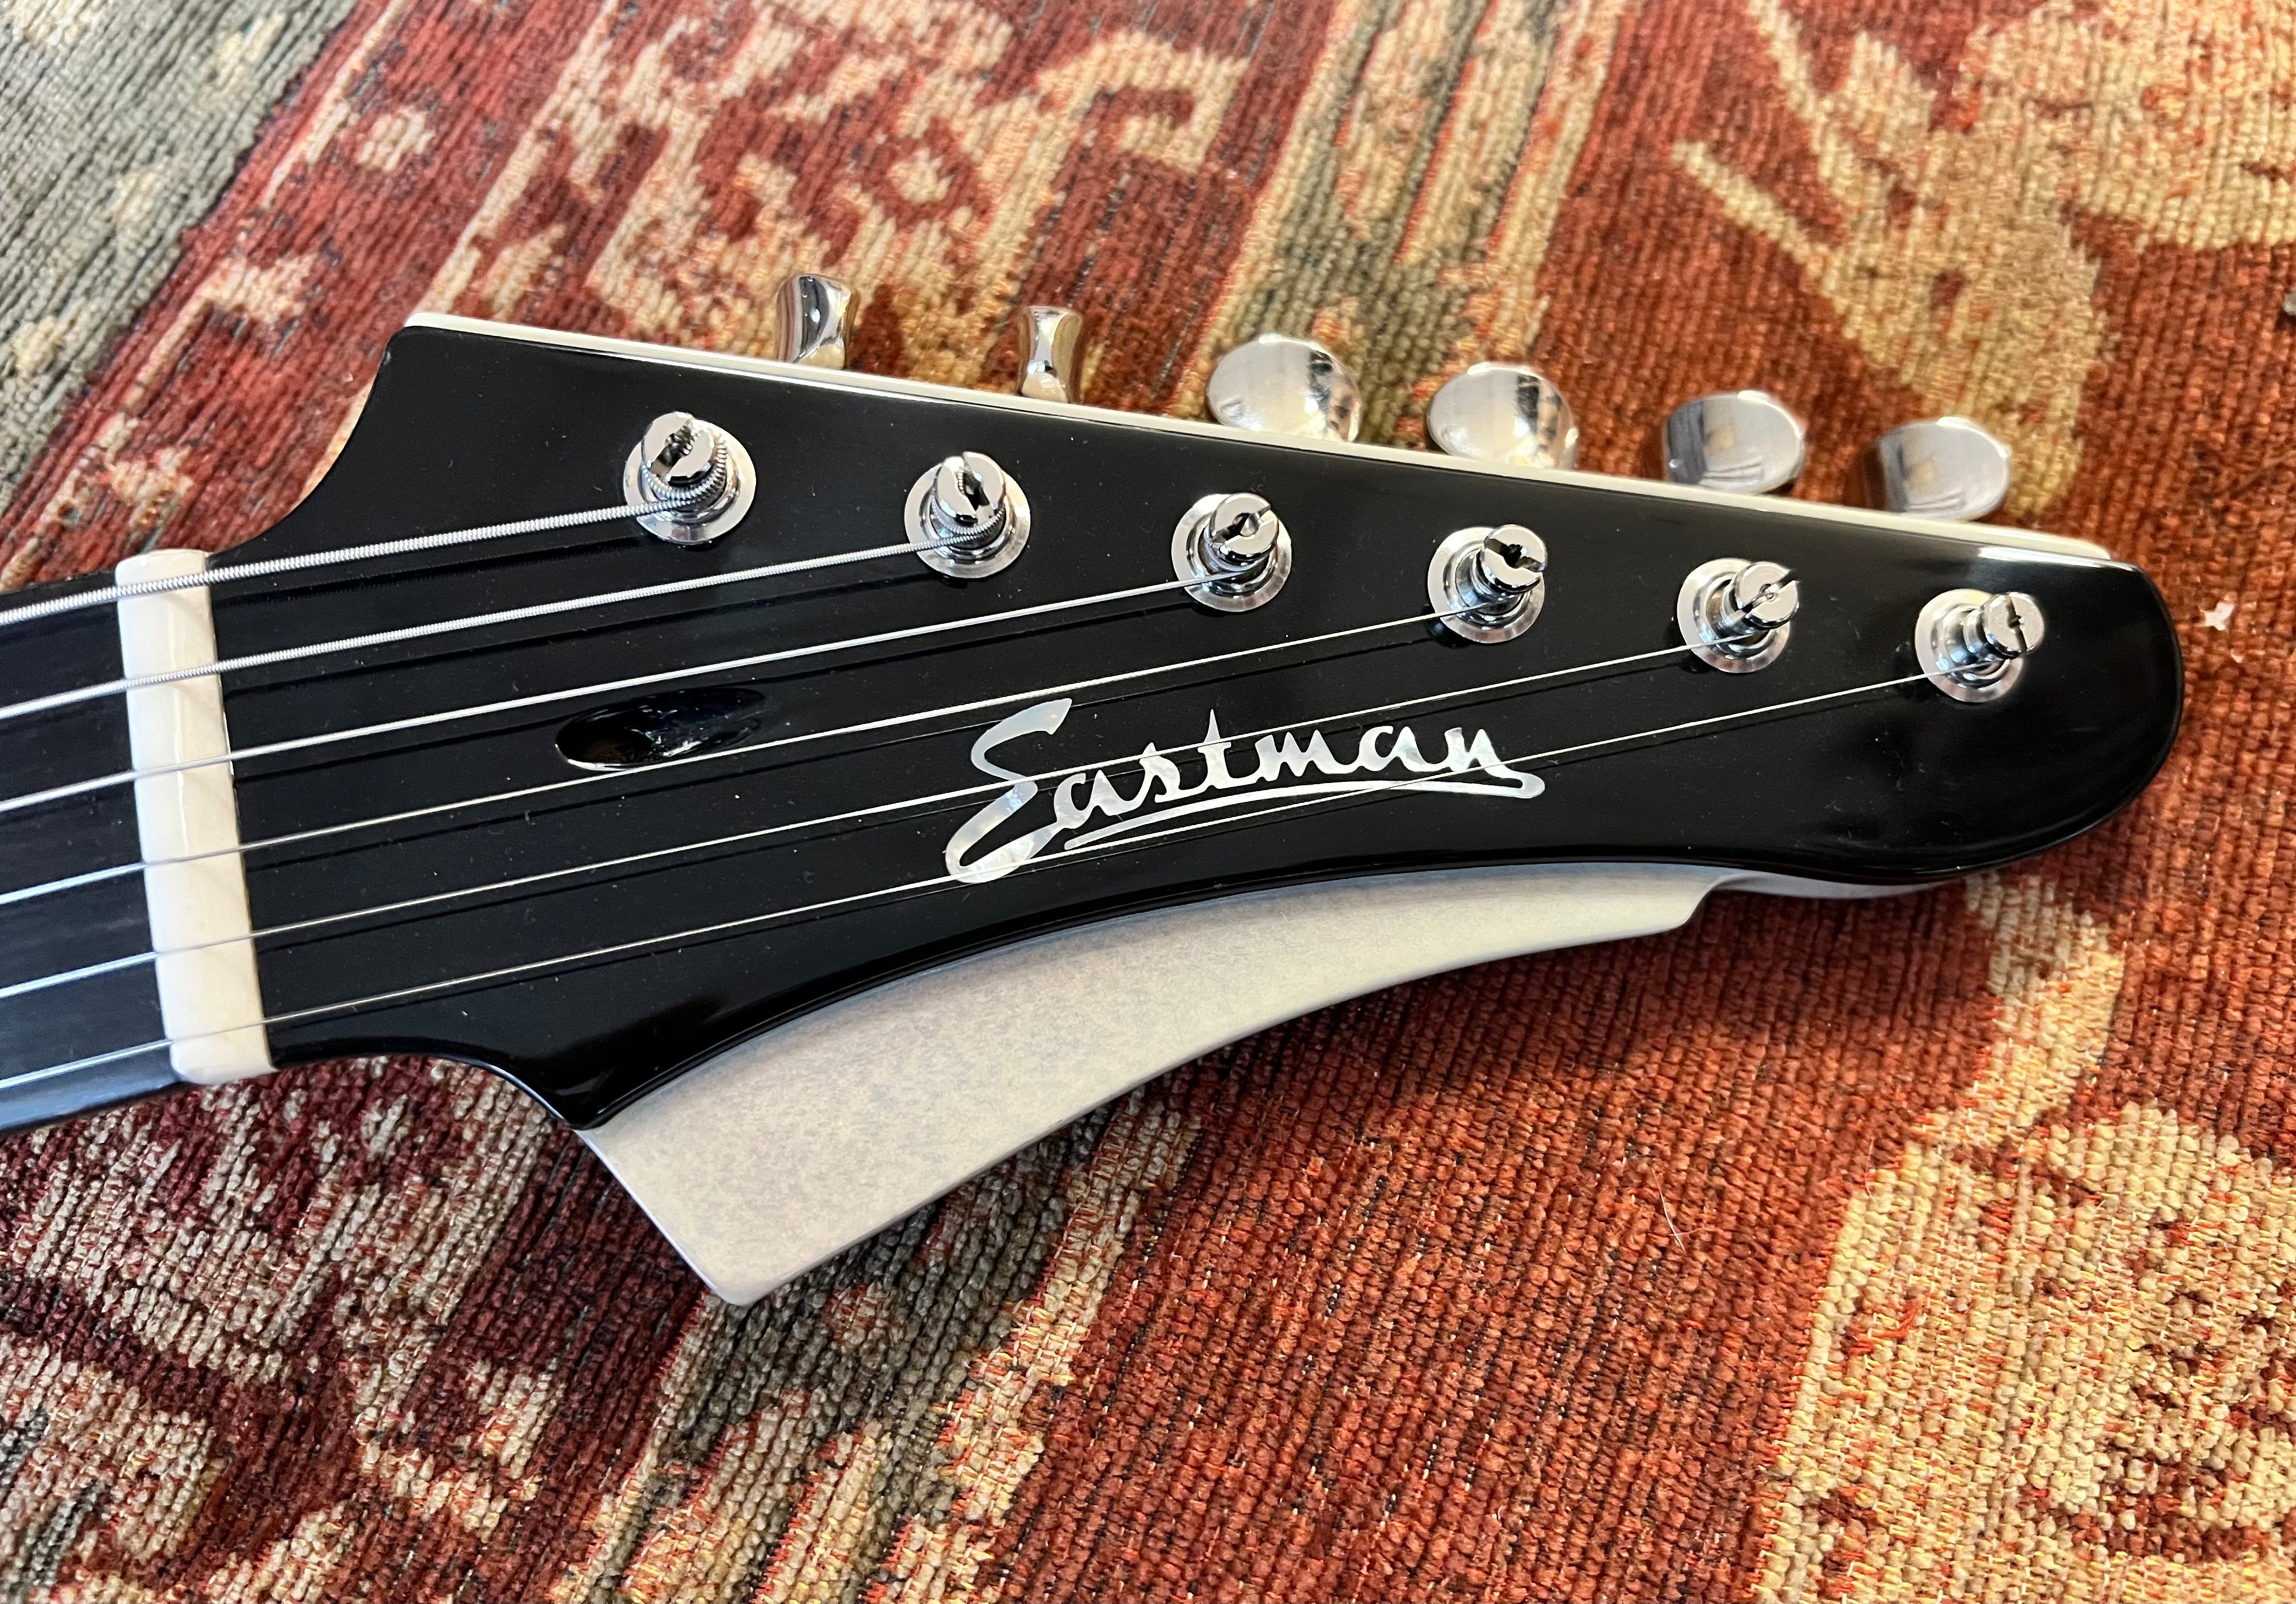 Eastman Juliet-PB Pomona Blonde, Electric Guitar for sale at Richards Guitars.